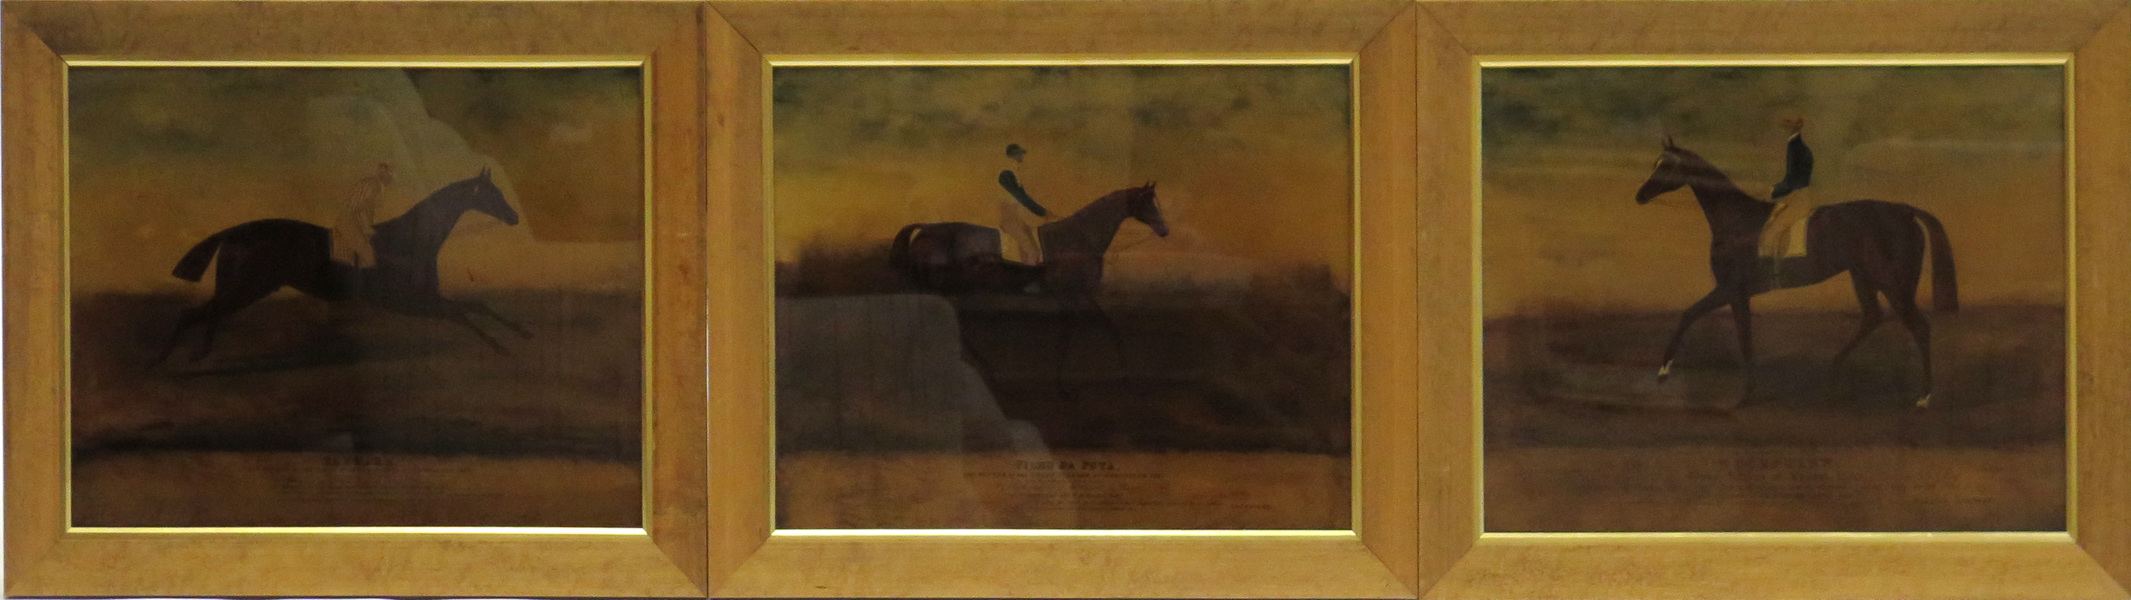 Hinterglasdruck, 3 st, hästar, bland annat "Filho da Puta" (!),_16358a_8d9e184a45be9a8_lg.jpeg